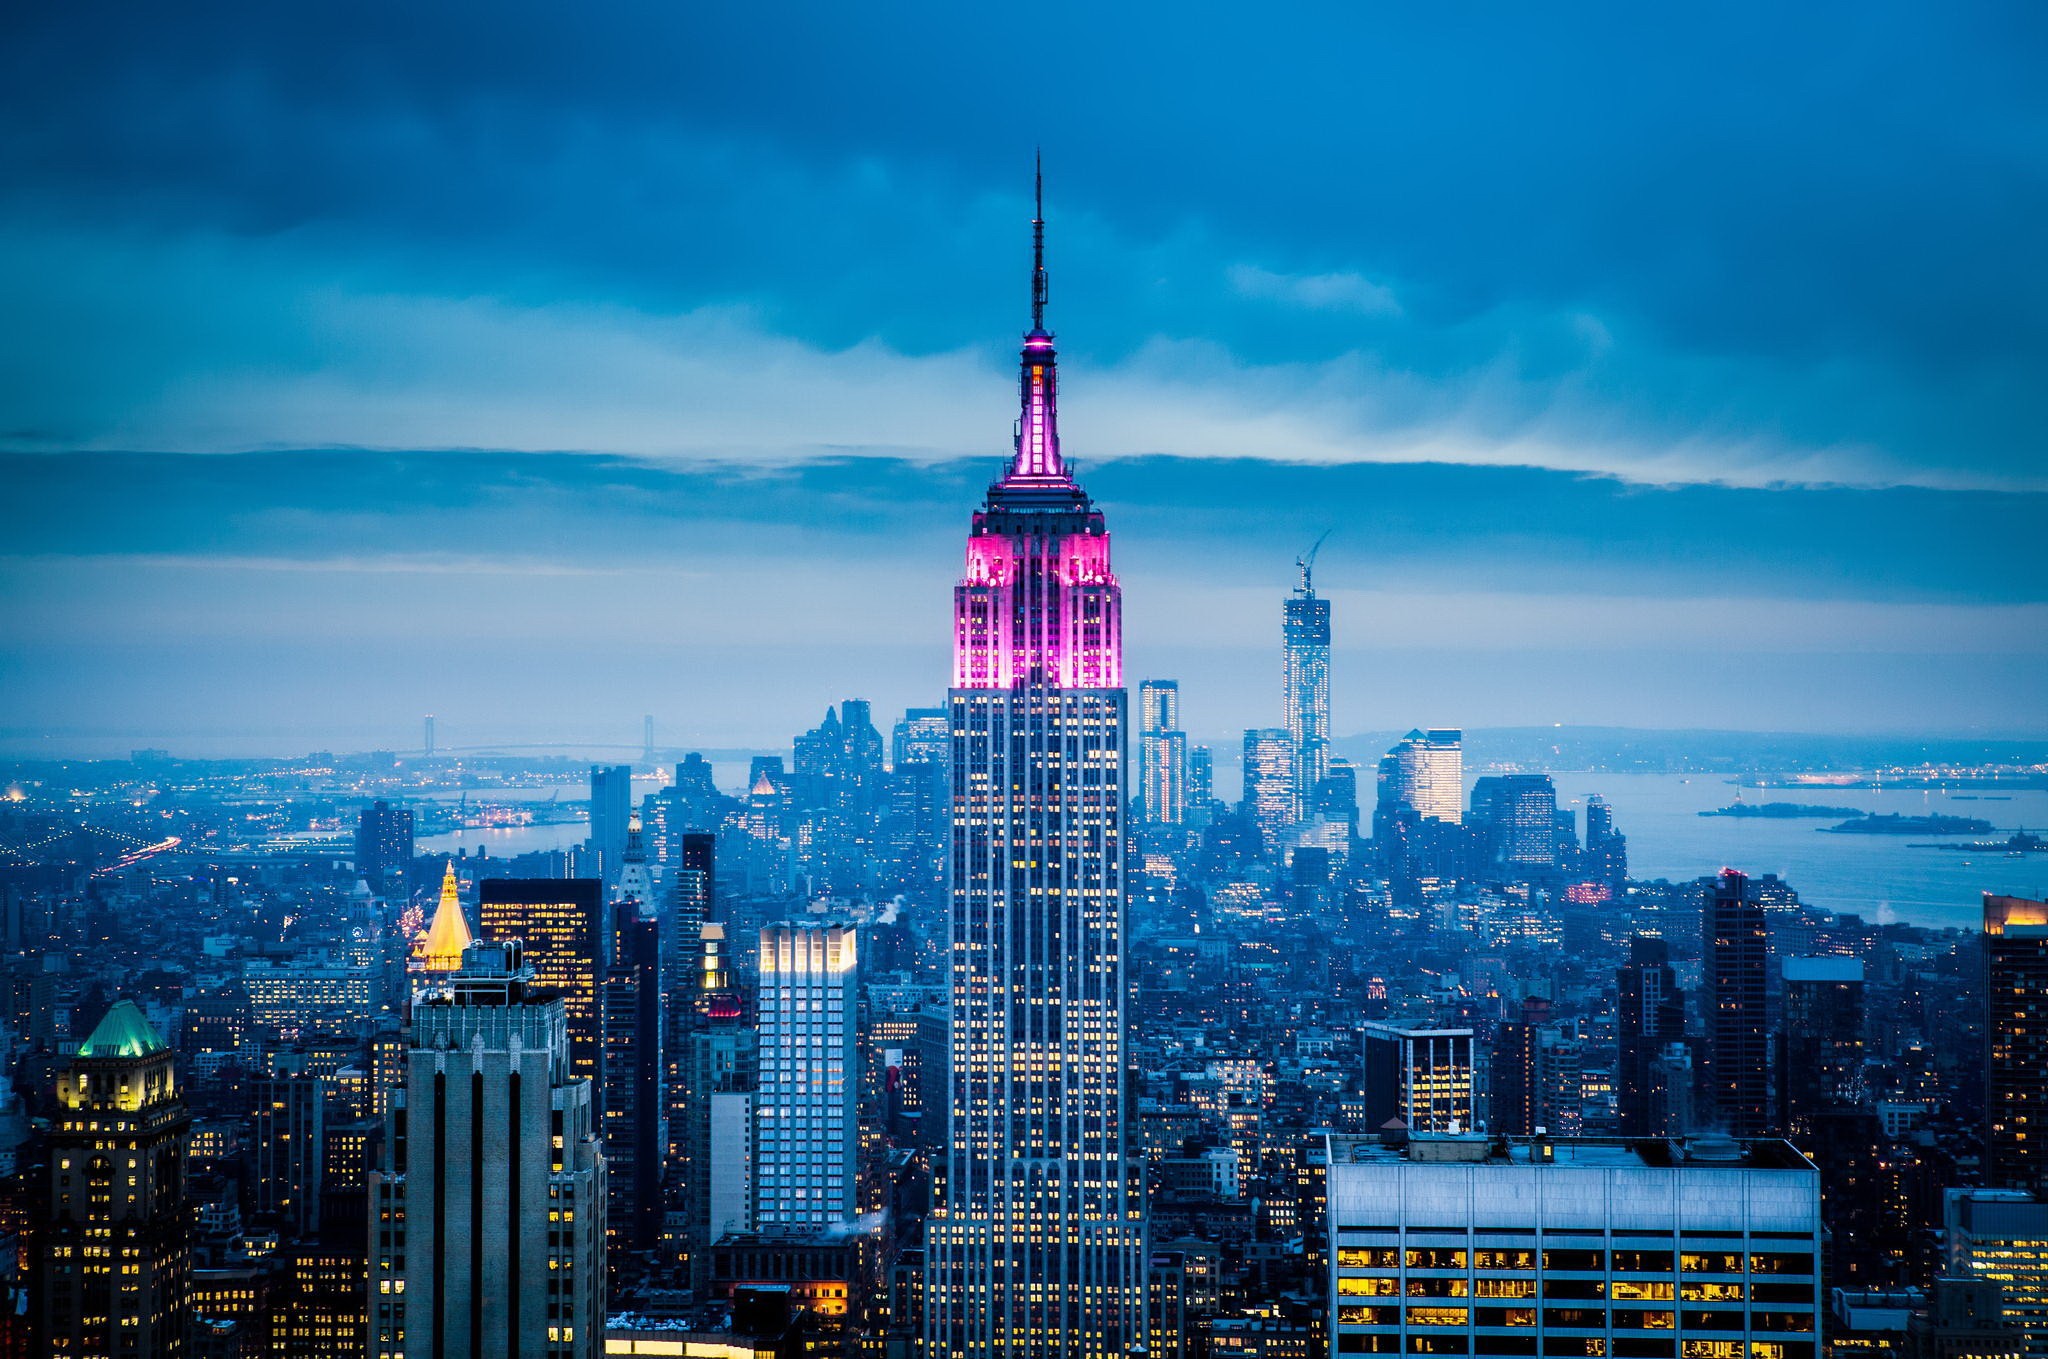 General 2048x1359 sky city New York City city lights Empire State Building blue USA cityscape